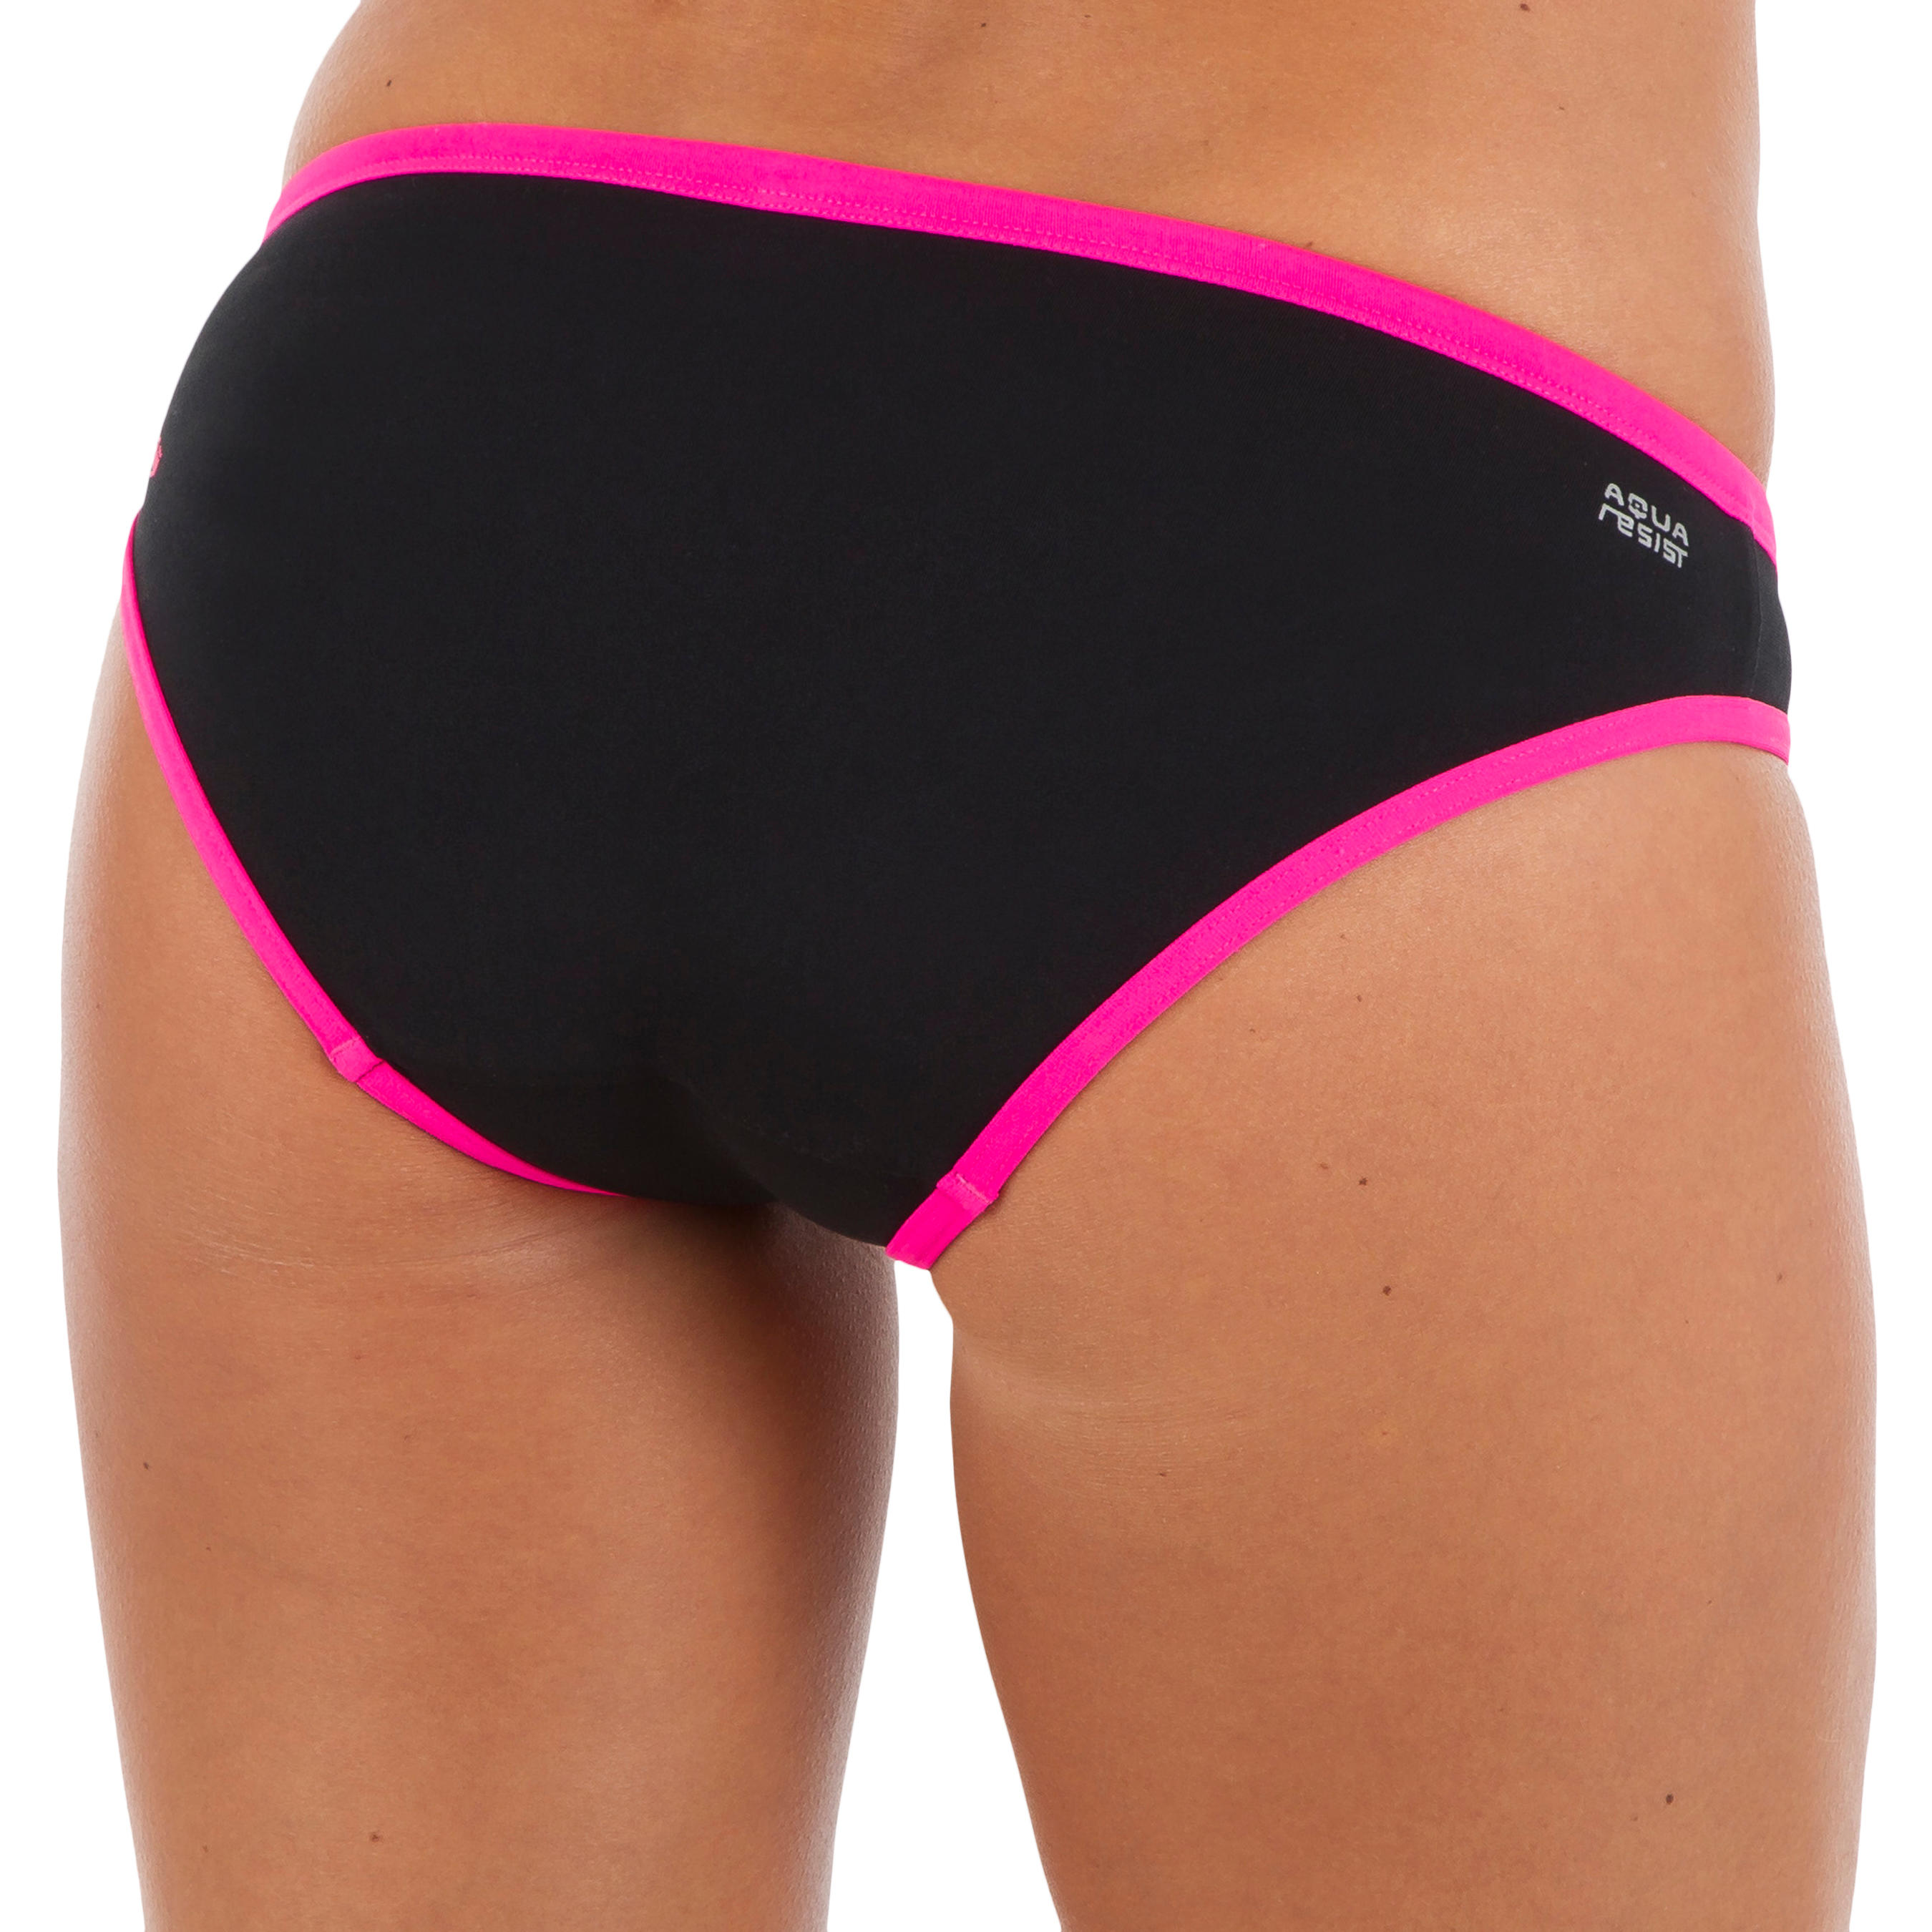 Jade Women's Chlorine Resistant Swimsuit Bottoms - Black/Pink 3/6